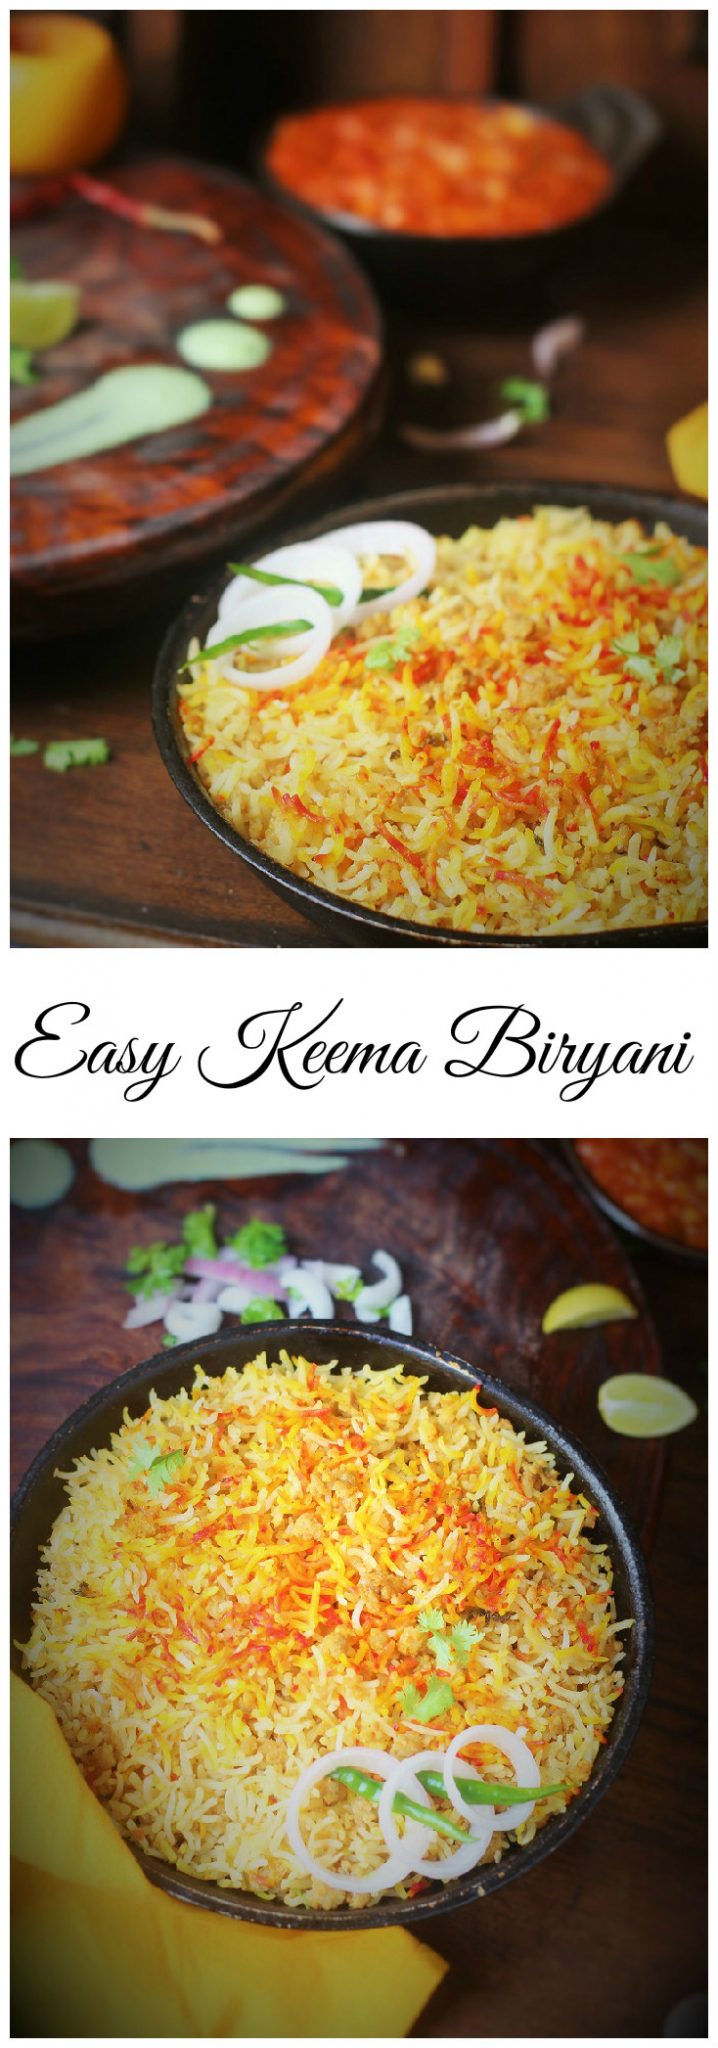 Easy and Delicious Mutton Keema Biryani